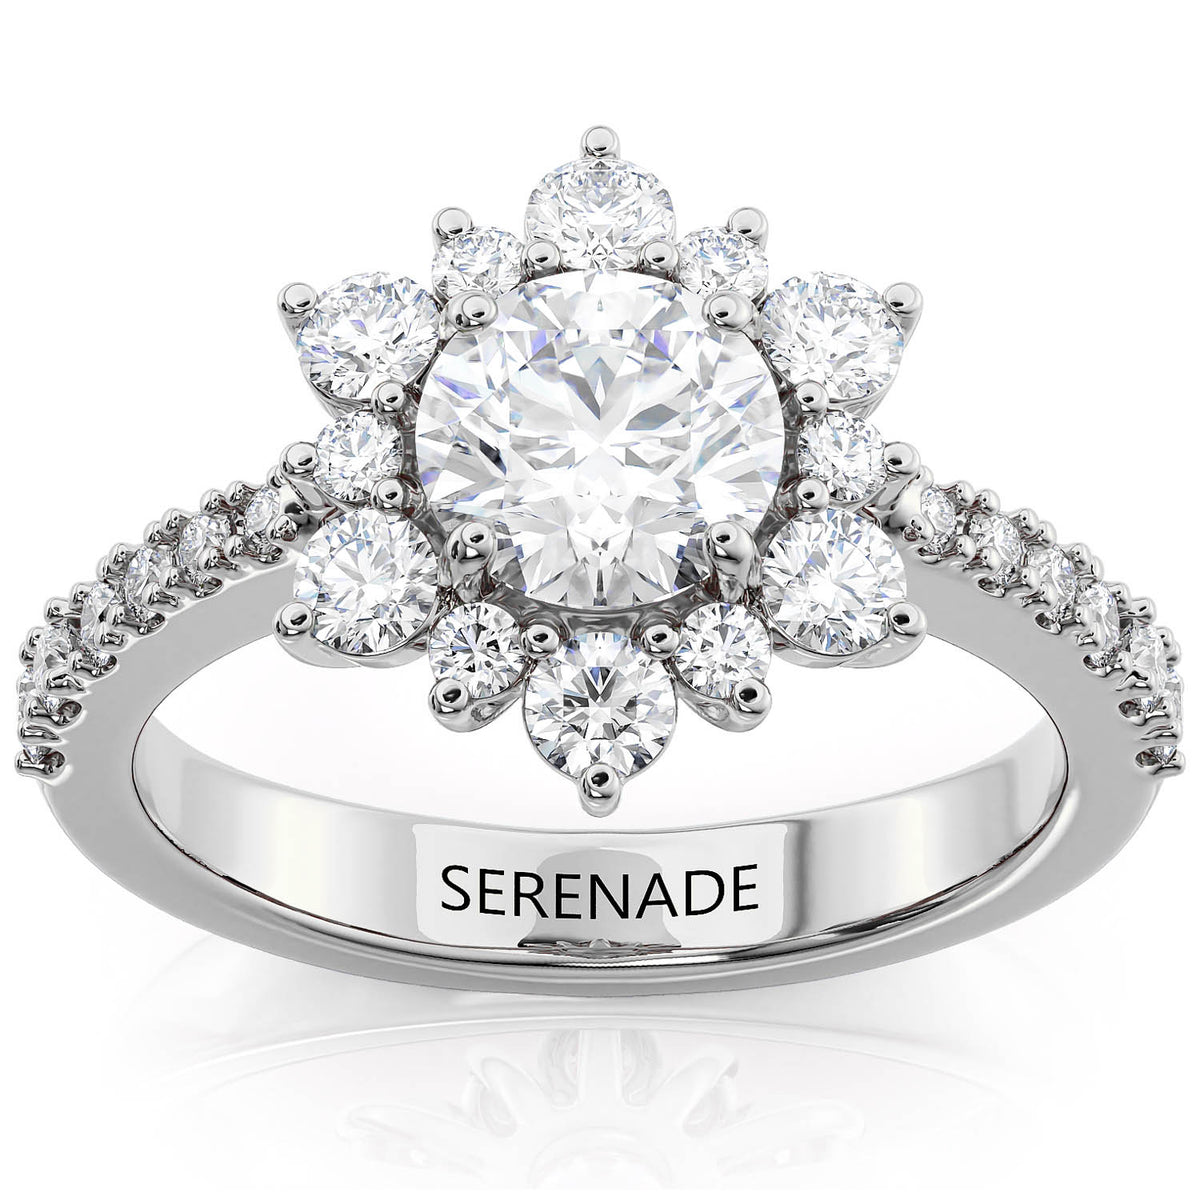 Snowflake Inspired Diamond Halo Engagement Ring - Snowflake